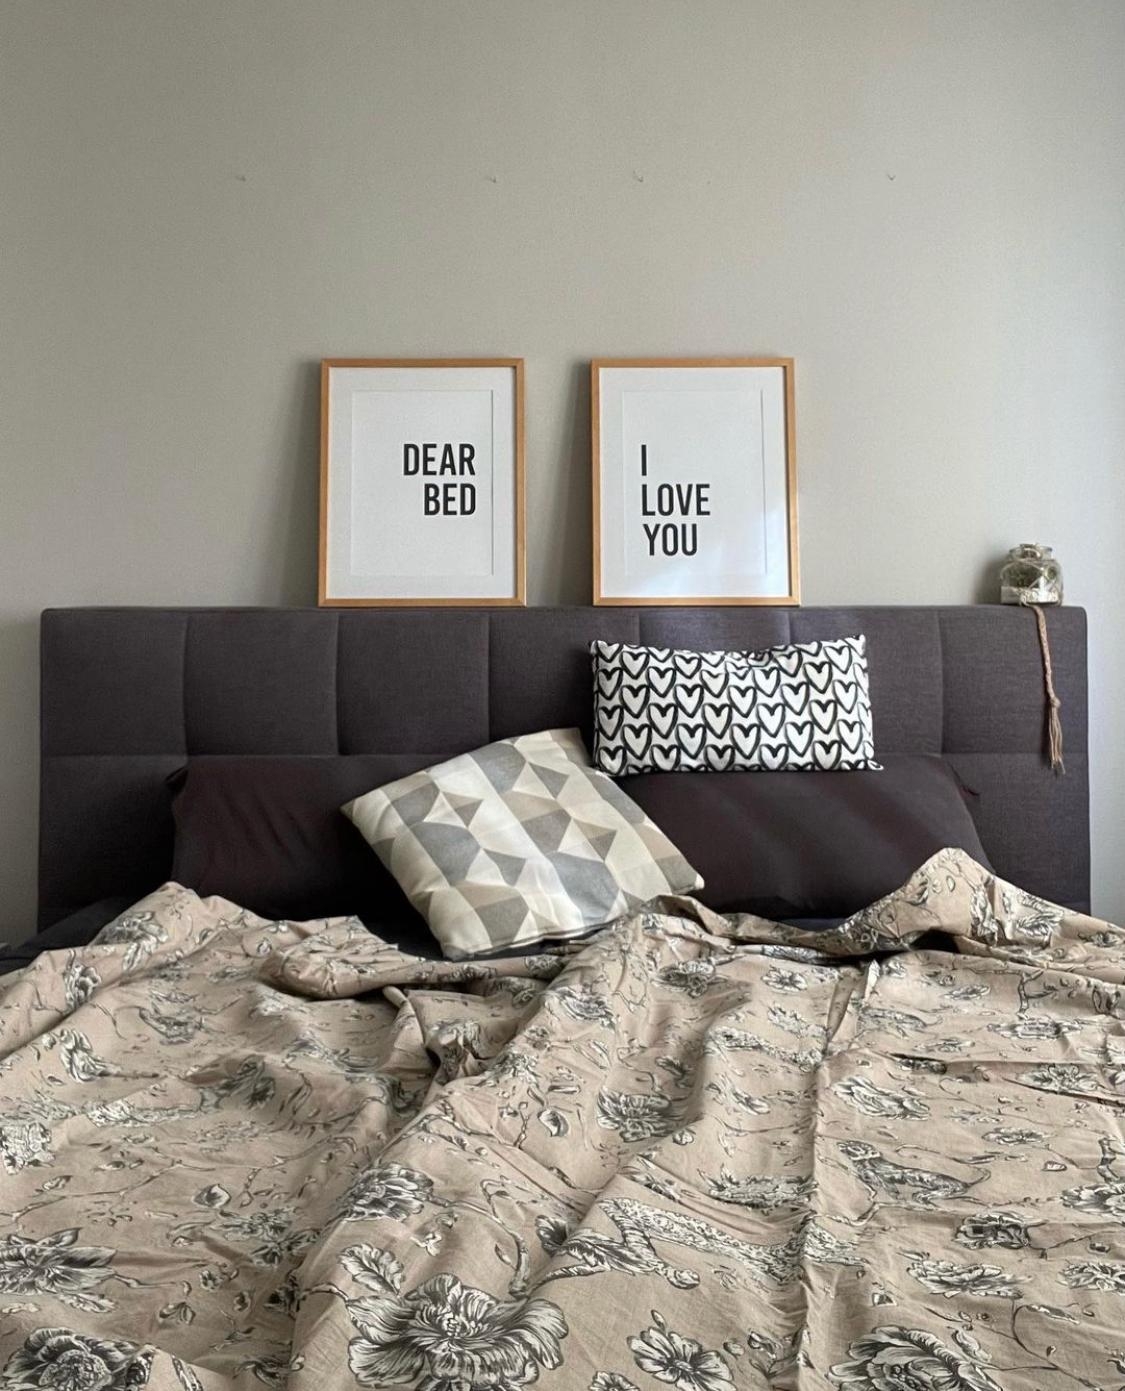 Dear bed I love you! #schlafzimmer #bett #bedroom #poster #dekoration #grau